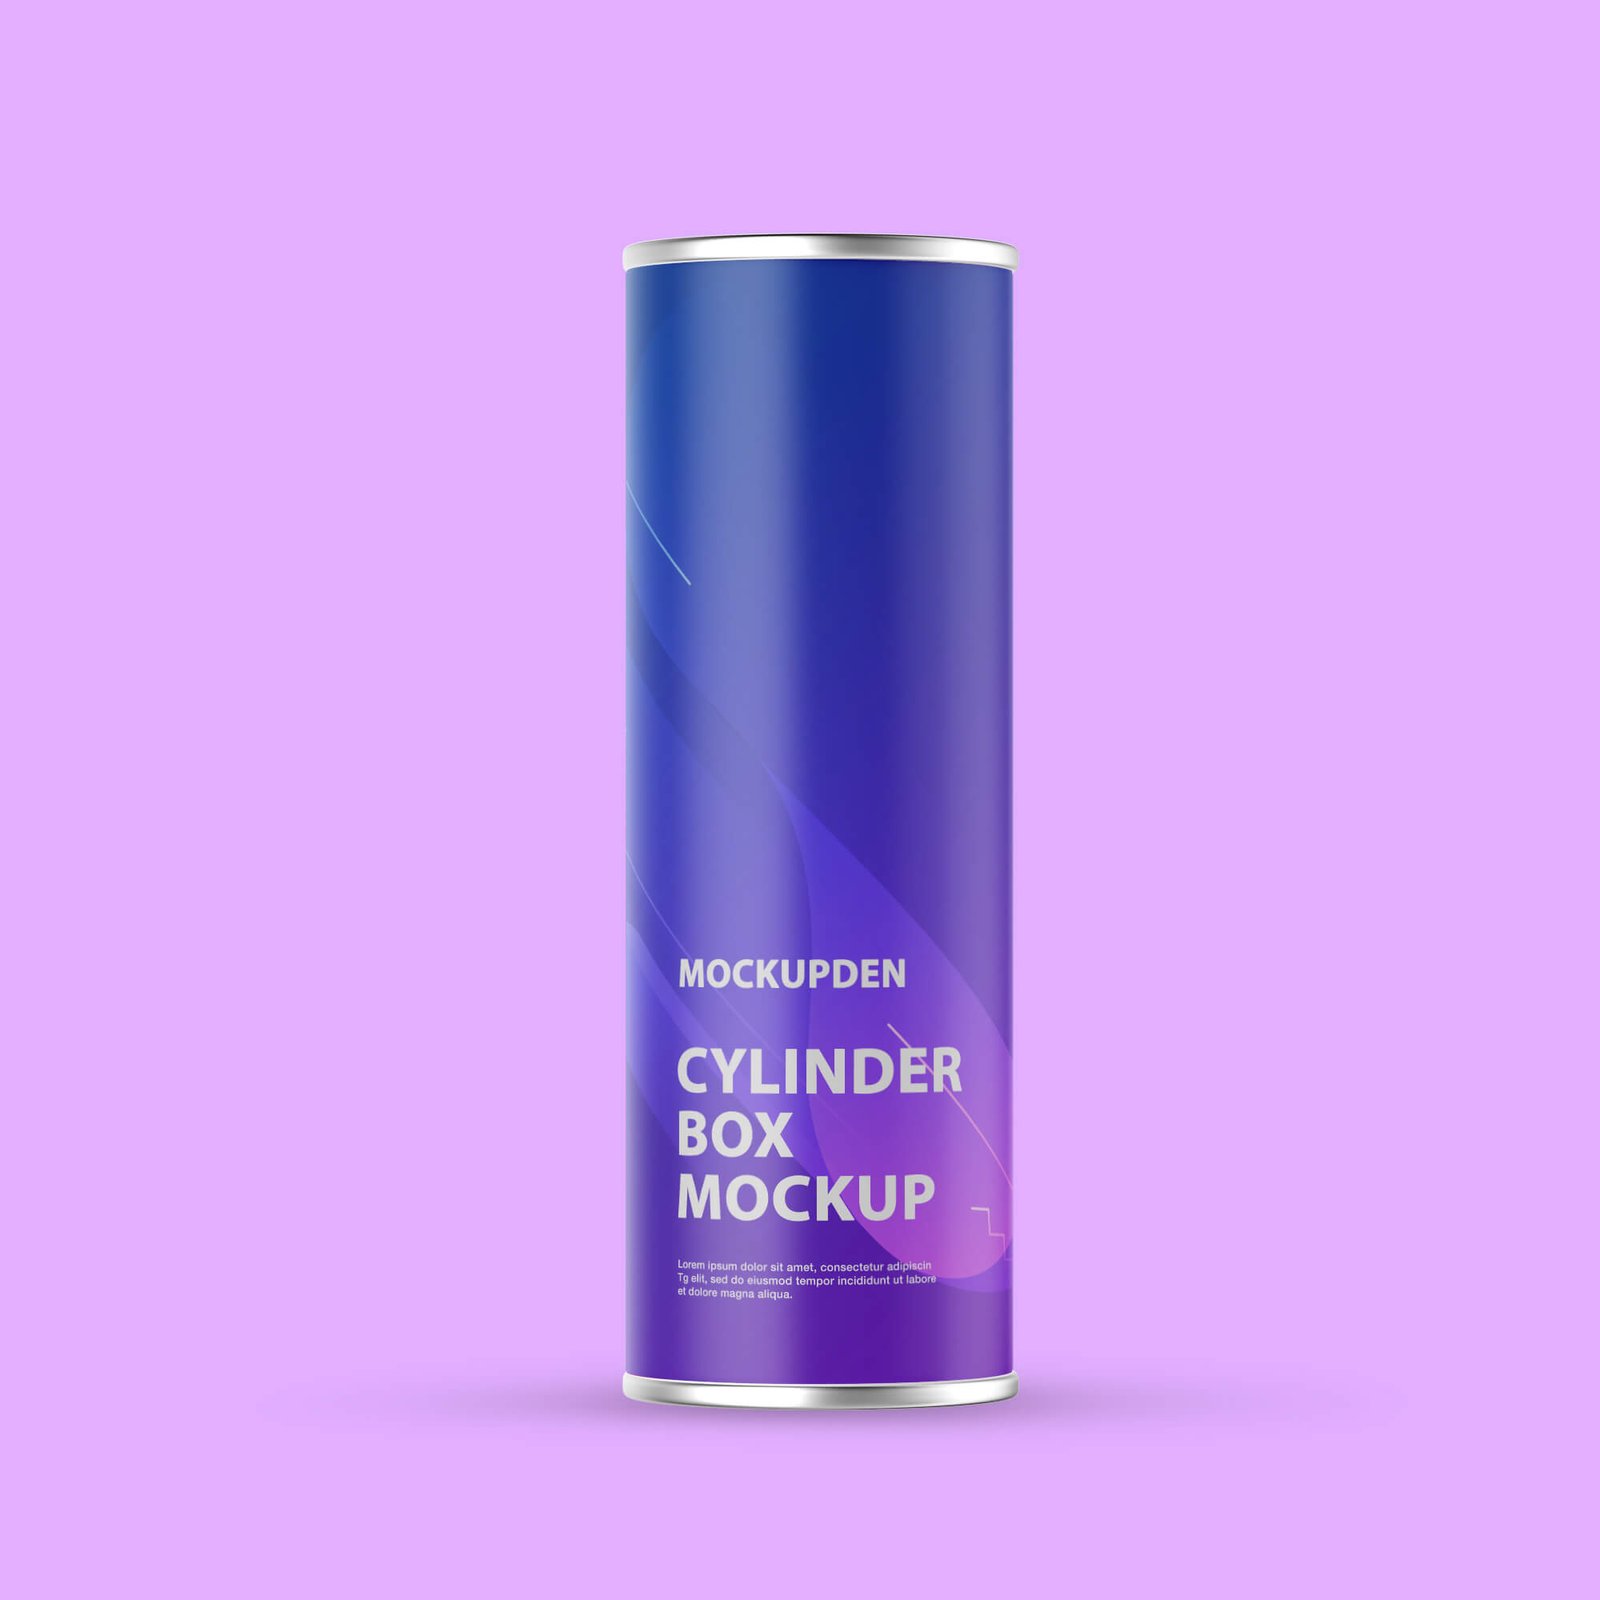 Free Cylinder Box Mockup PSD Template